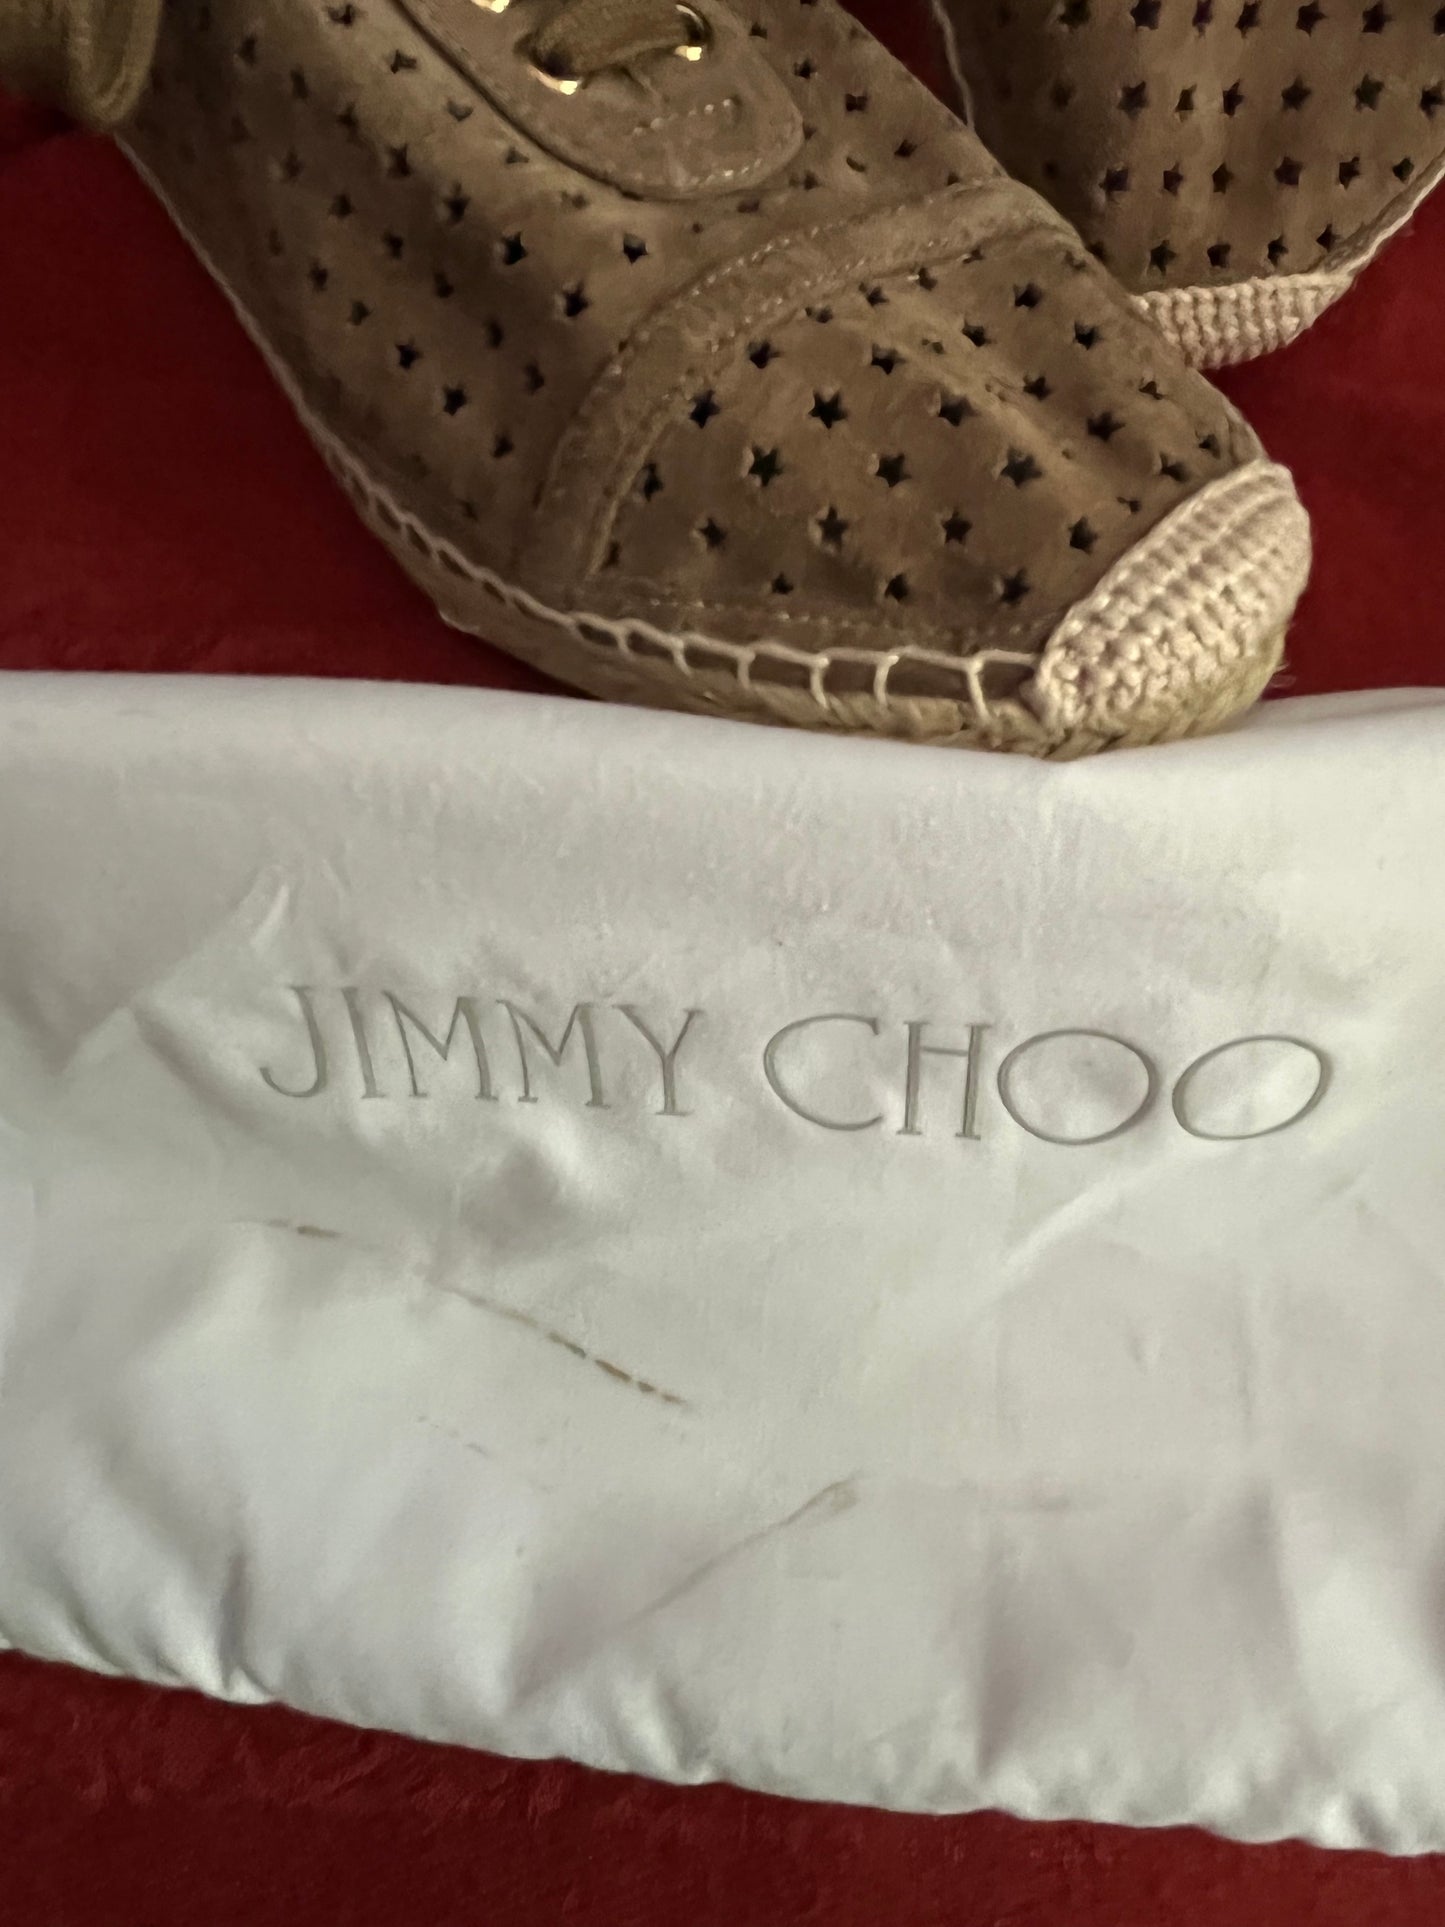 Jimmy Choo Suede Tie Espadrilles Made in Spain-Size 8.5